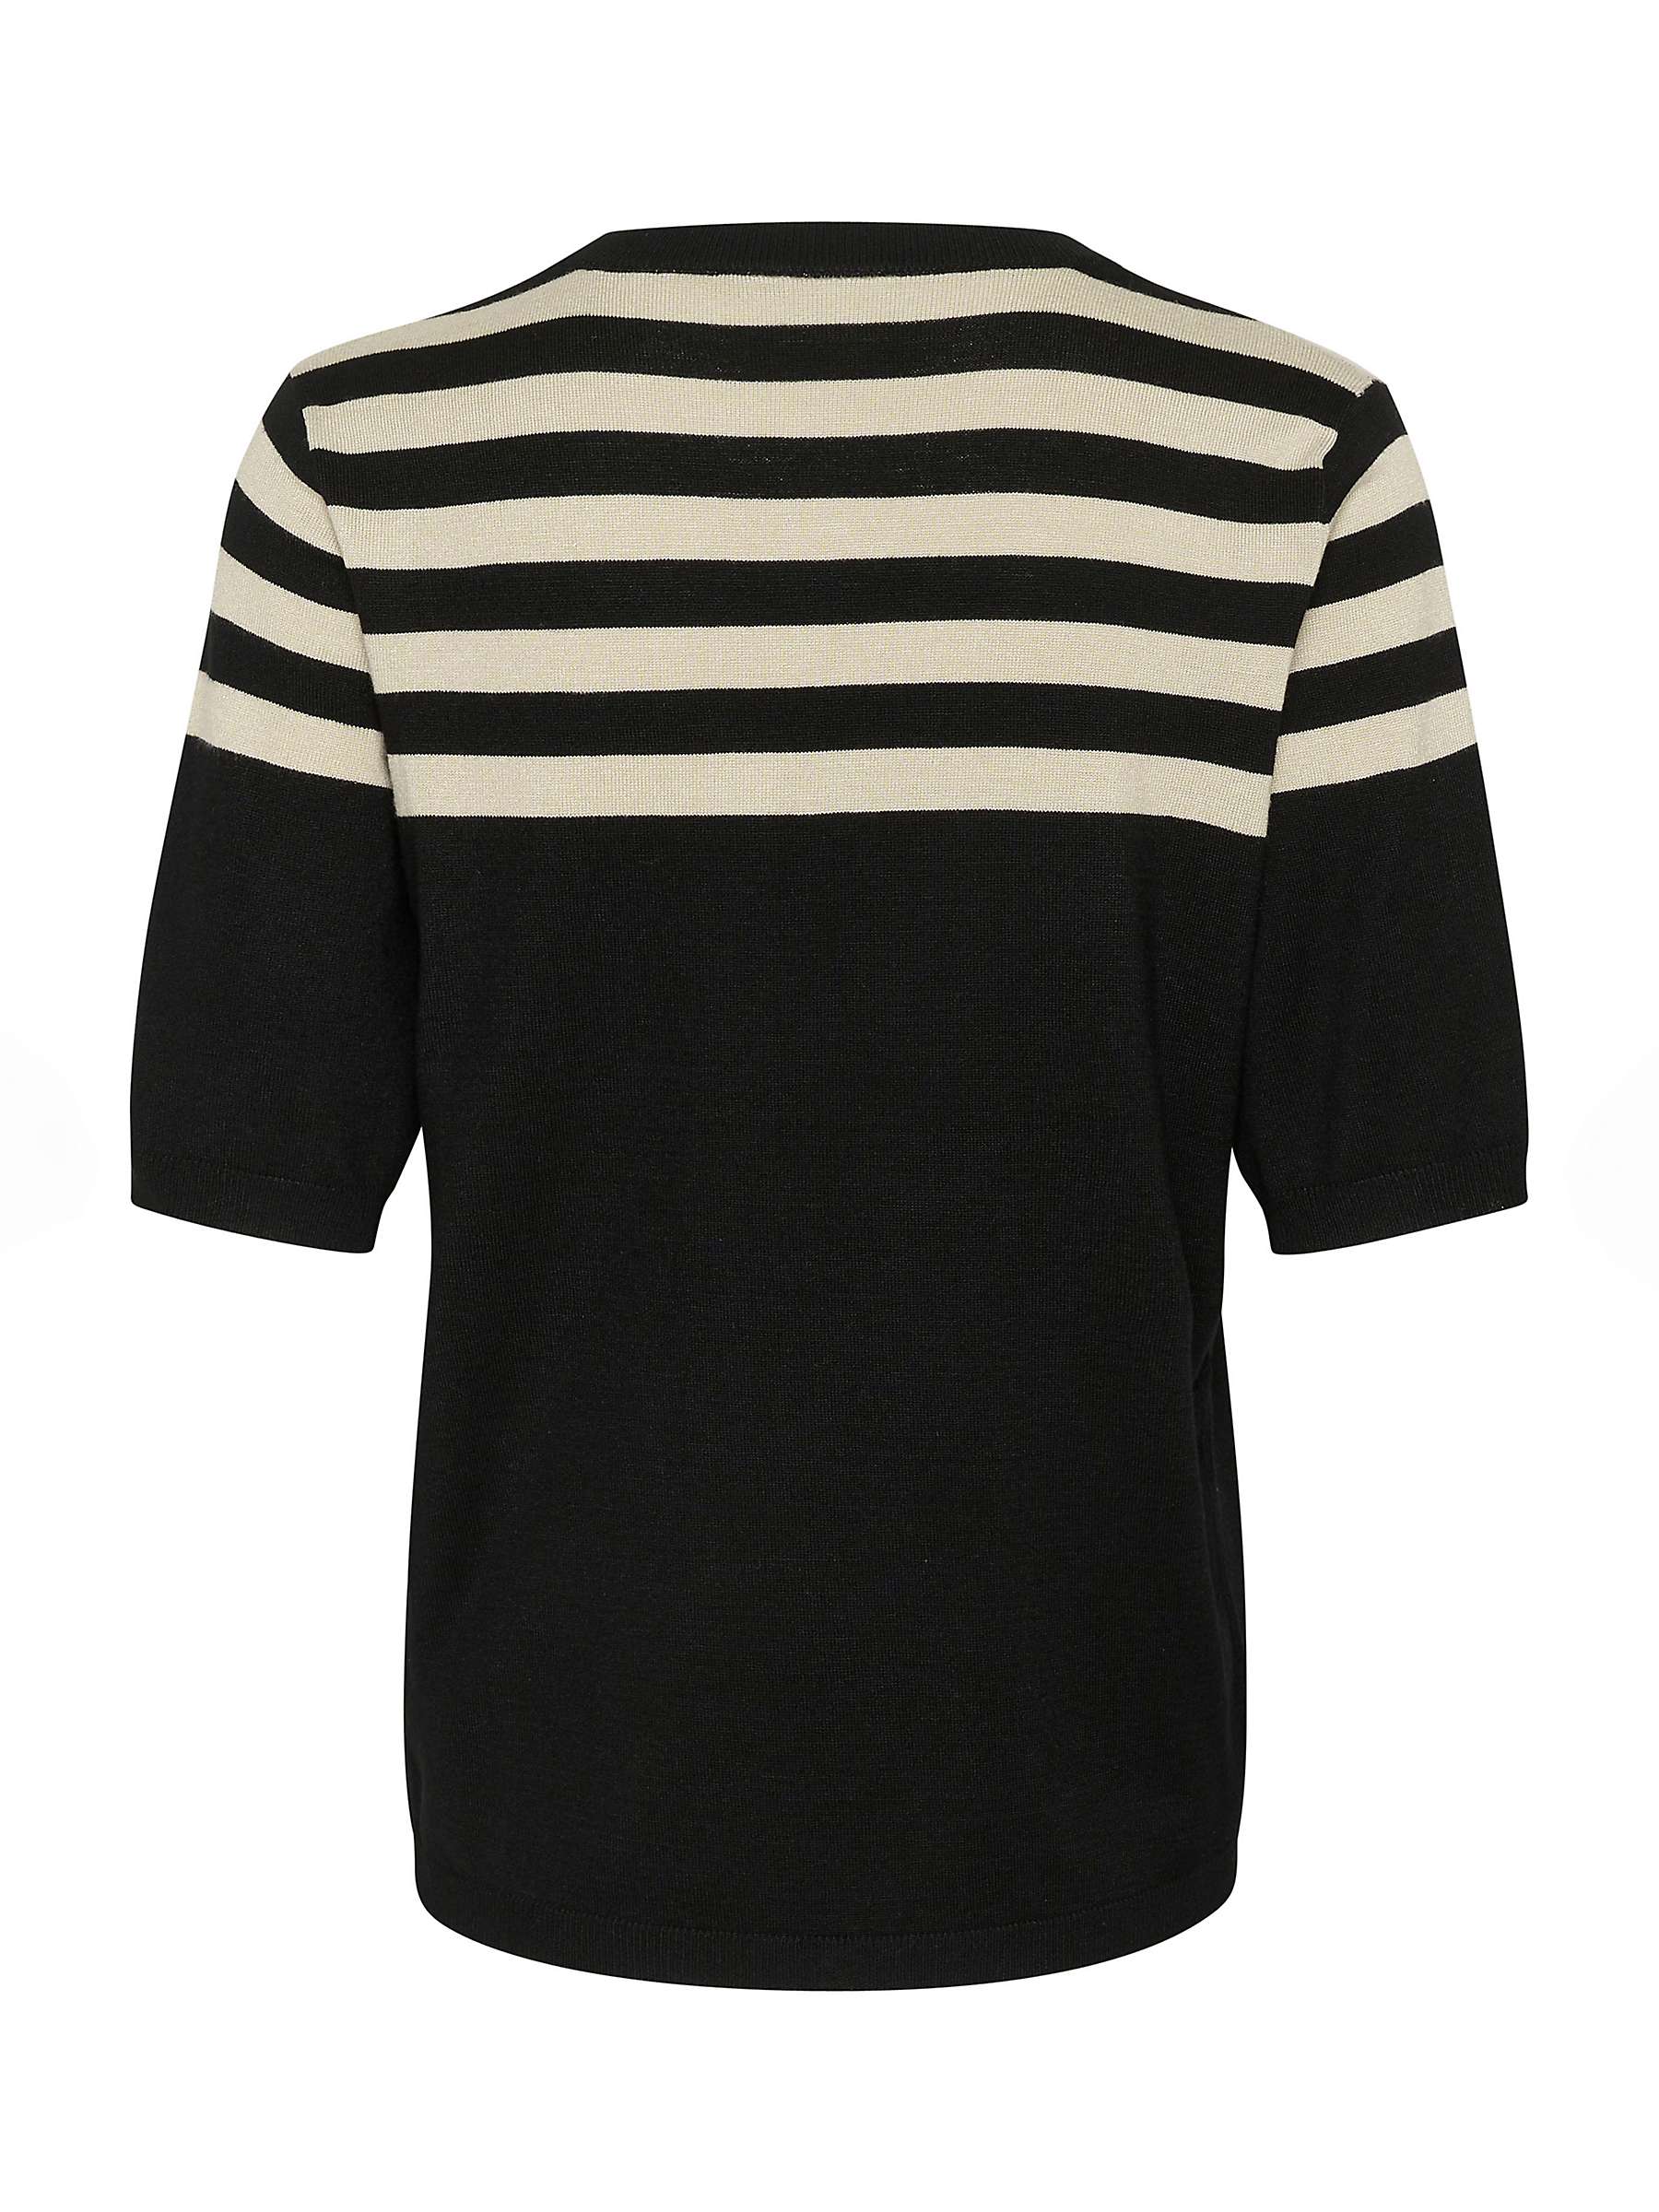 Buy KAFFE Milo Short Sleeve Knit Top, Black/Feather Online at johnlewis.com